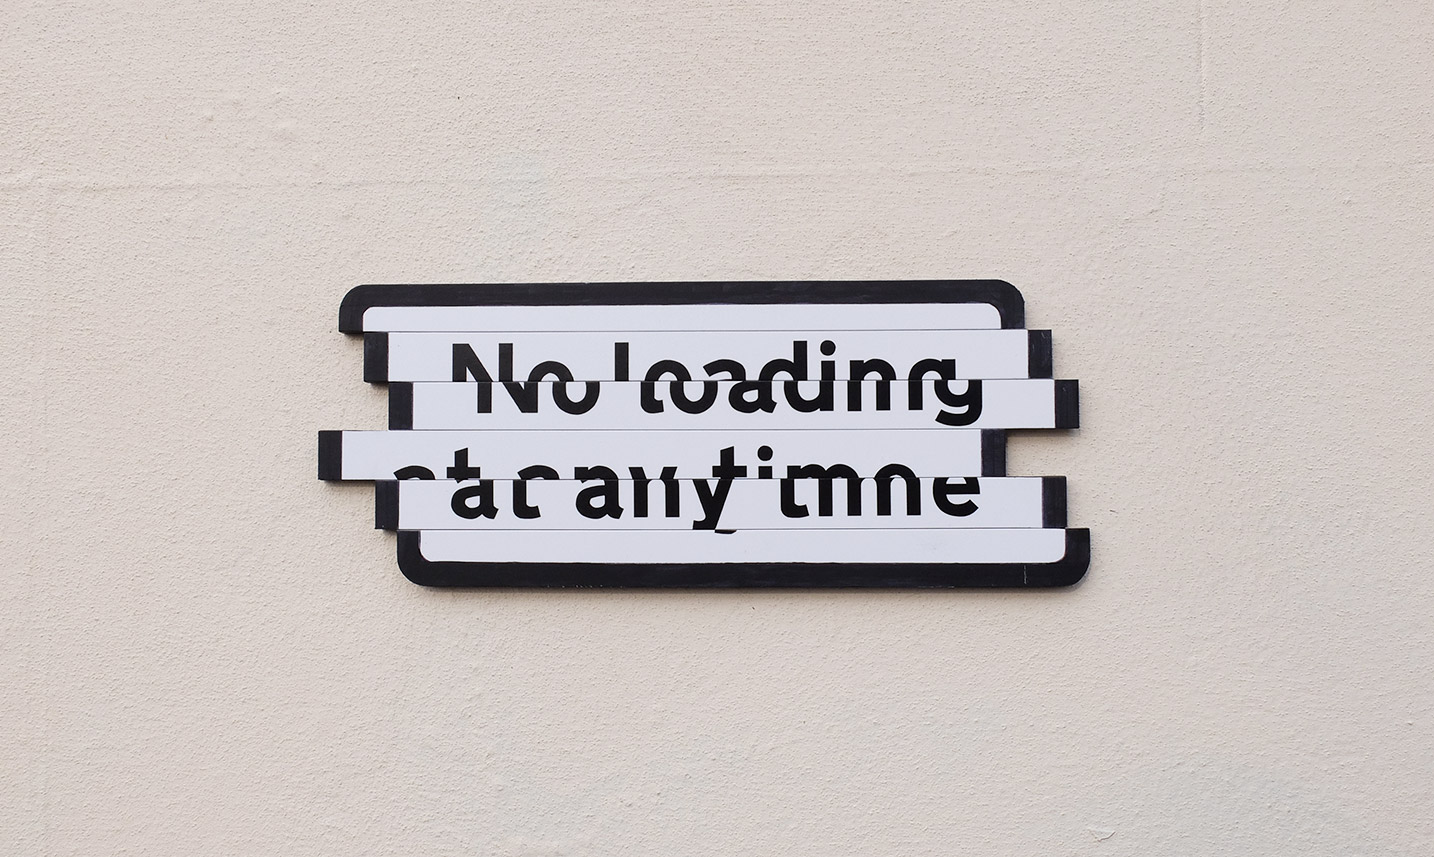 No loading at any time - (parallax)